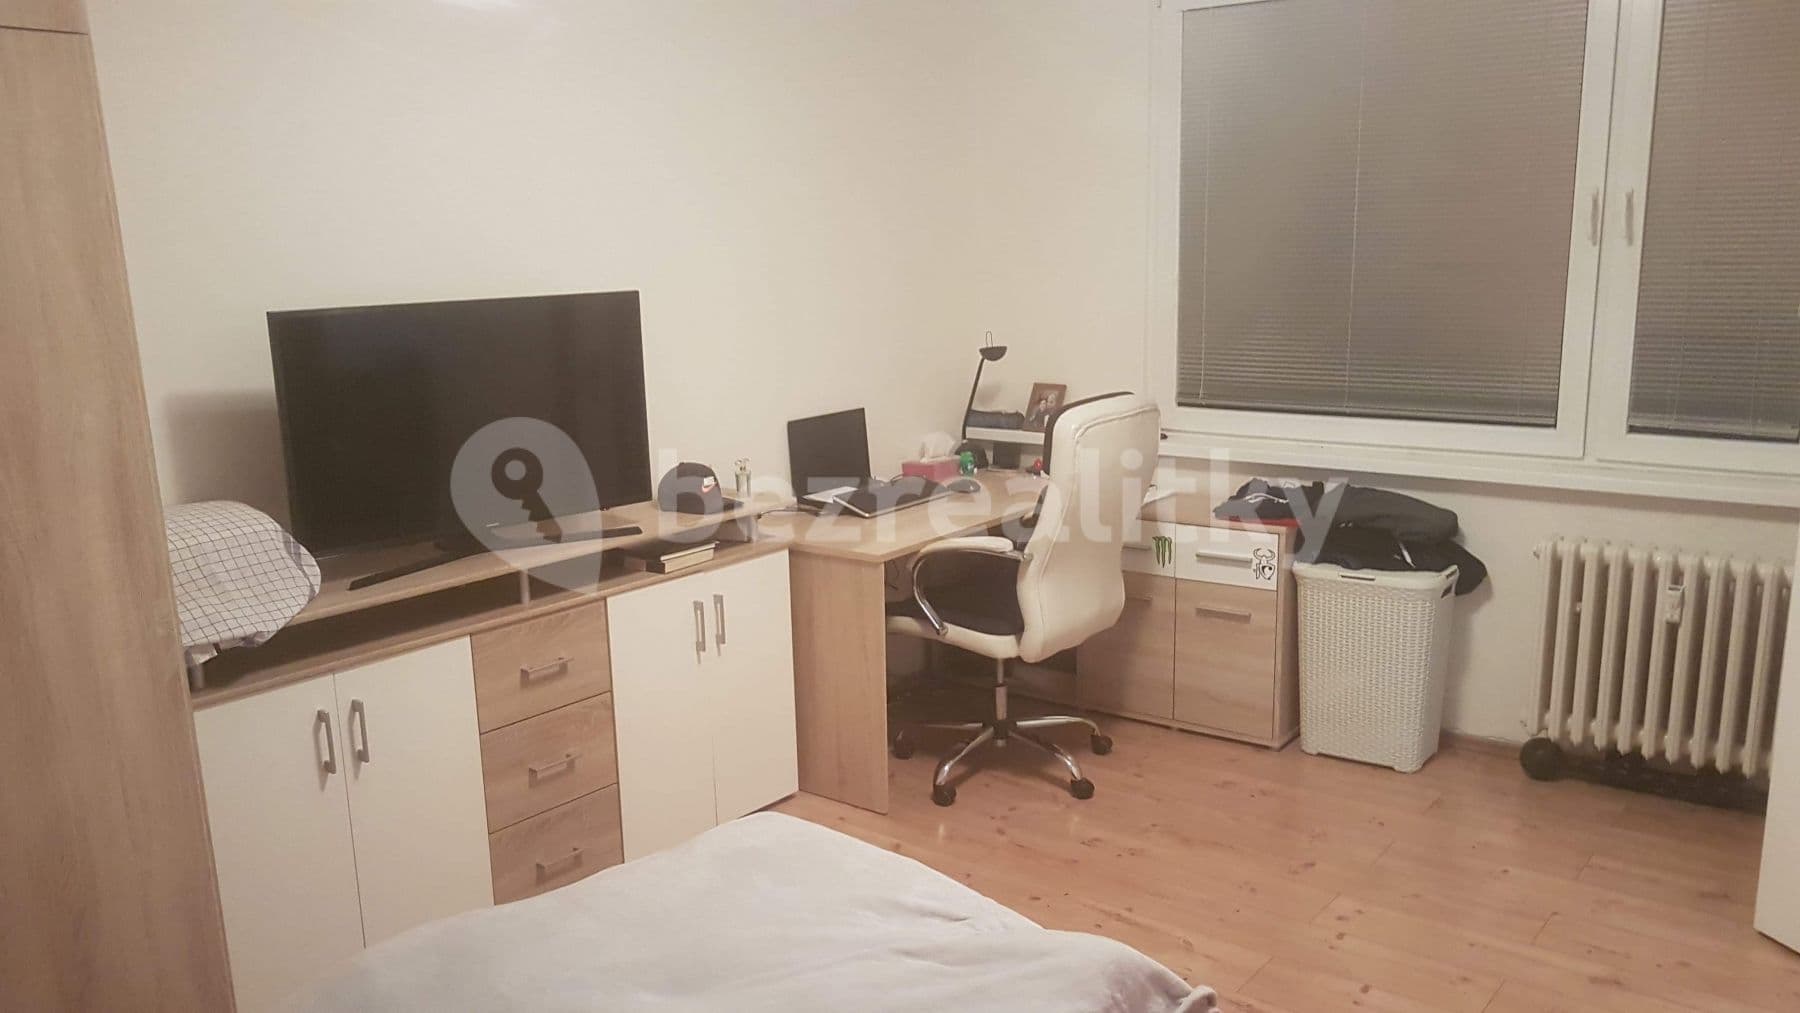 1 bedroom with open-plan kitchen flat to rent, 42 m², Gagarinova, Liberec, Liberecký Region